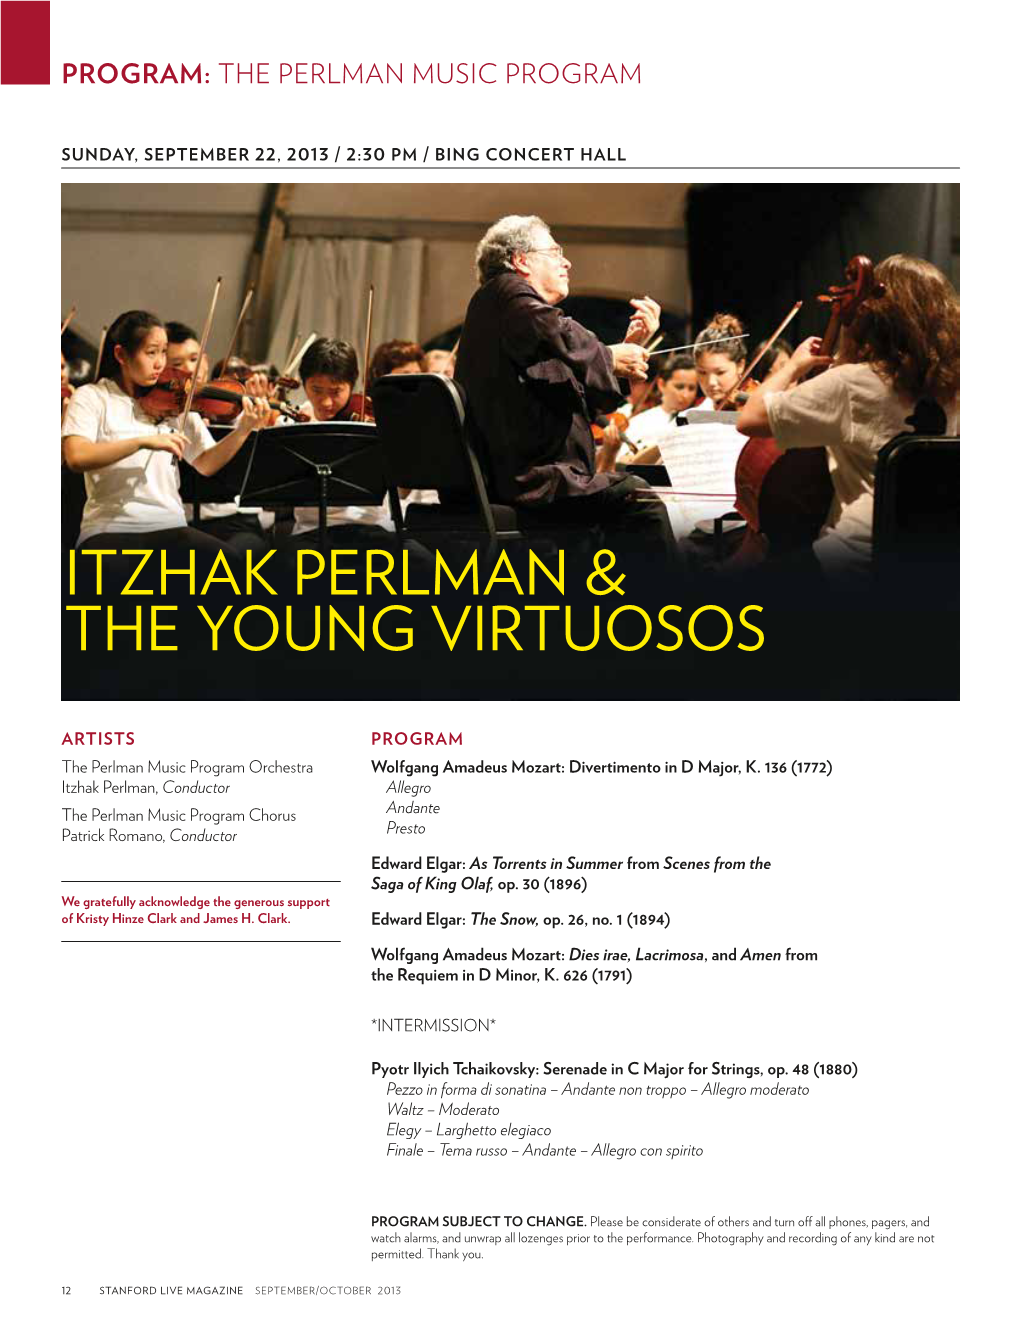 Itzhak Perlman & the Young Virtuosos